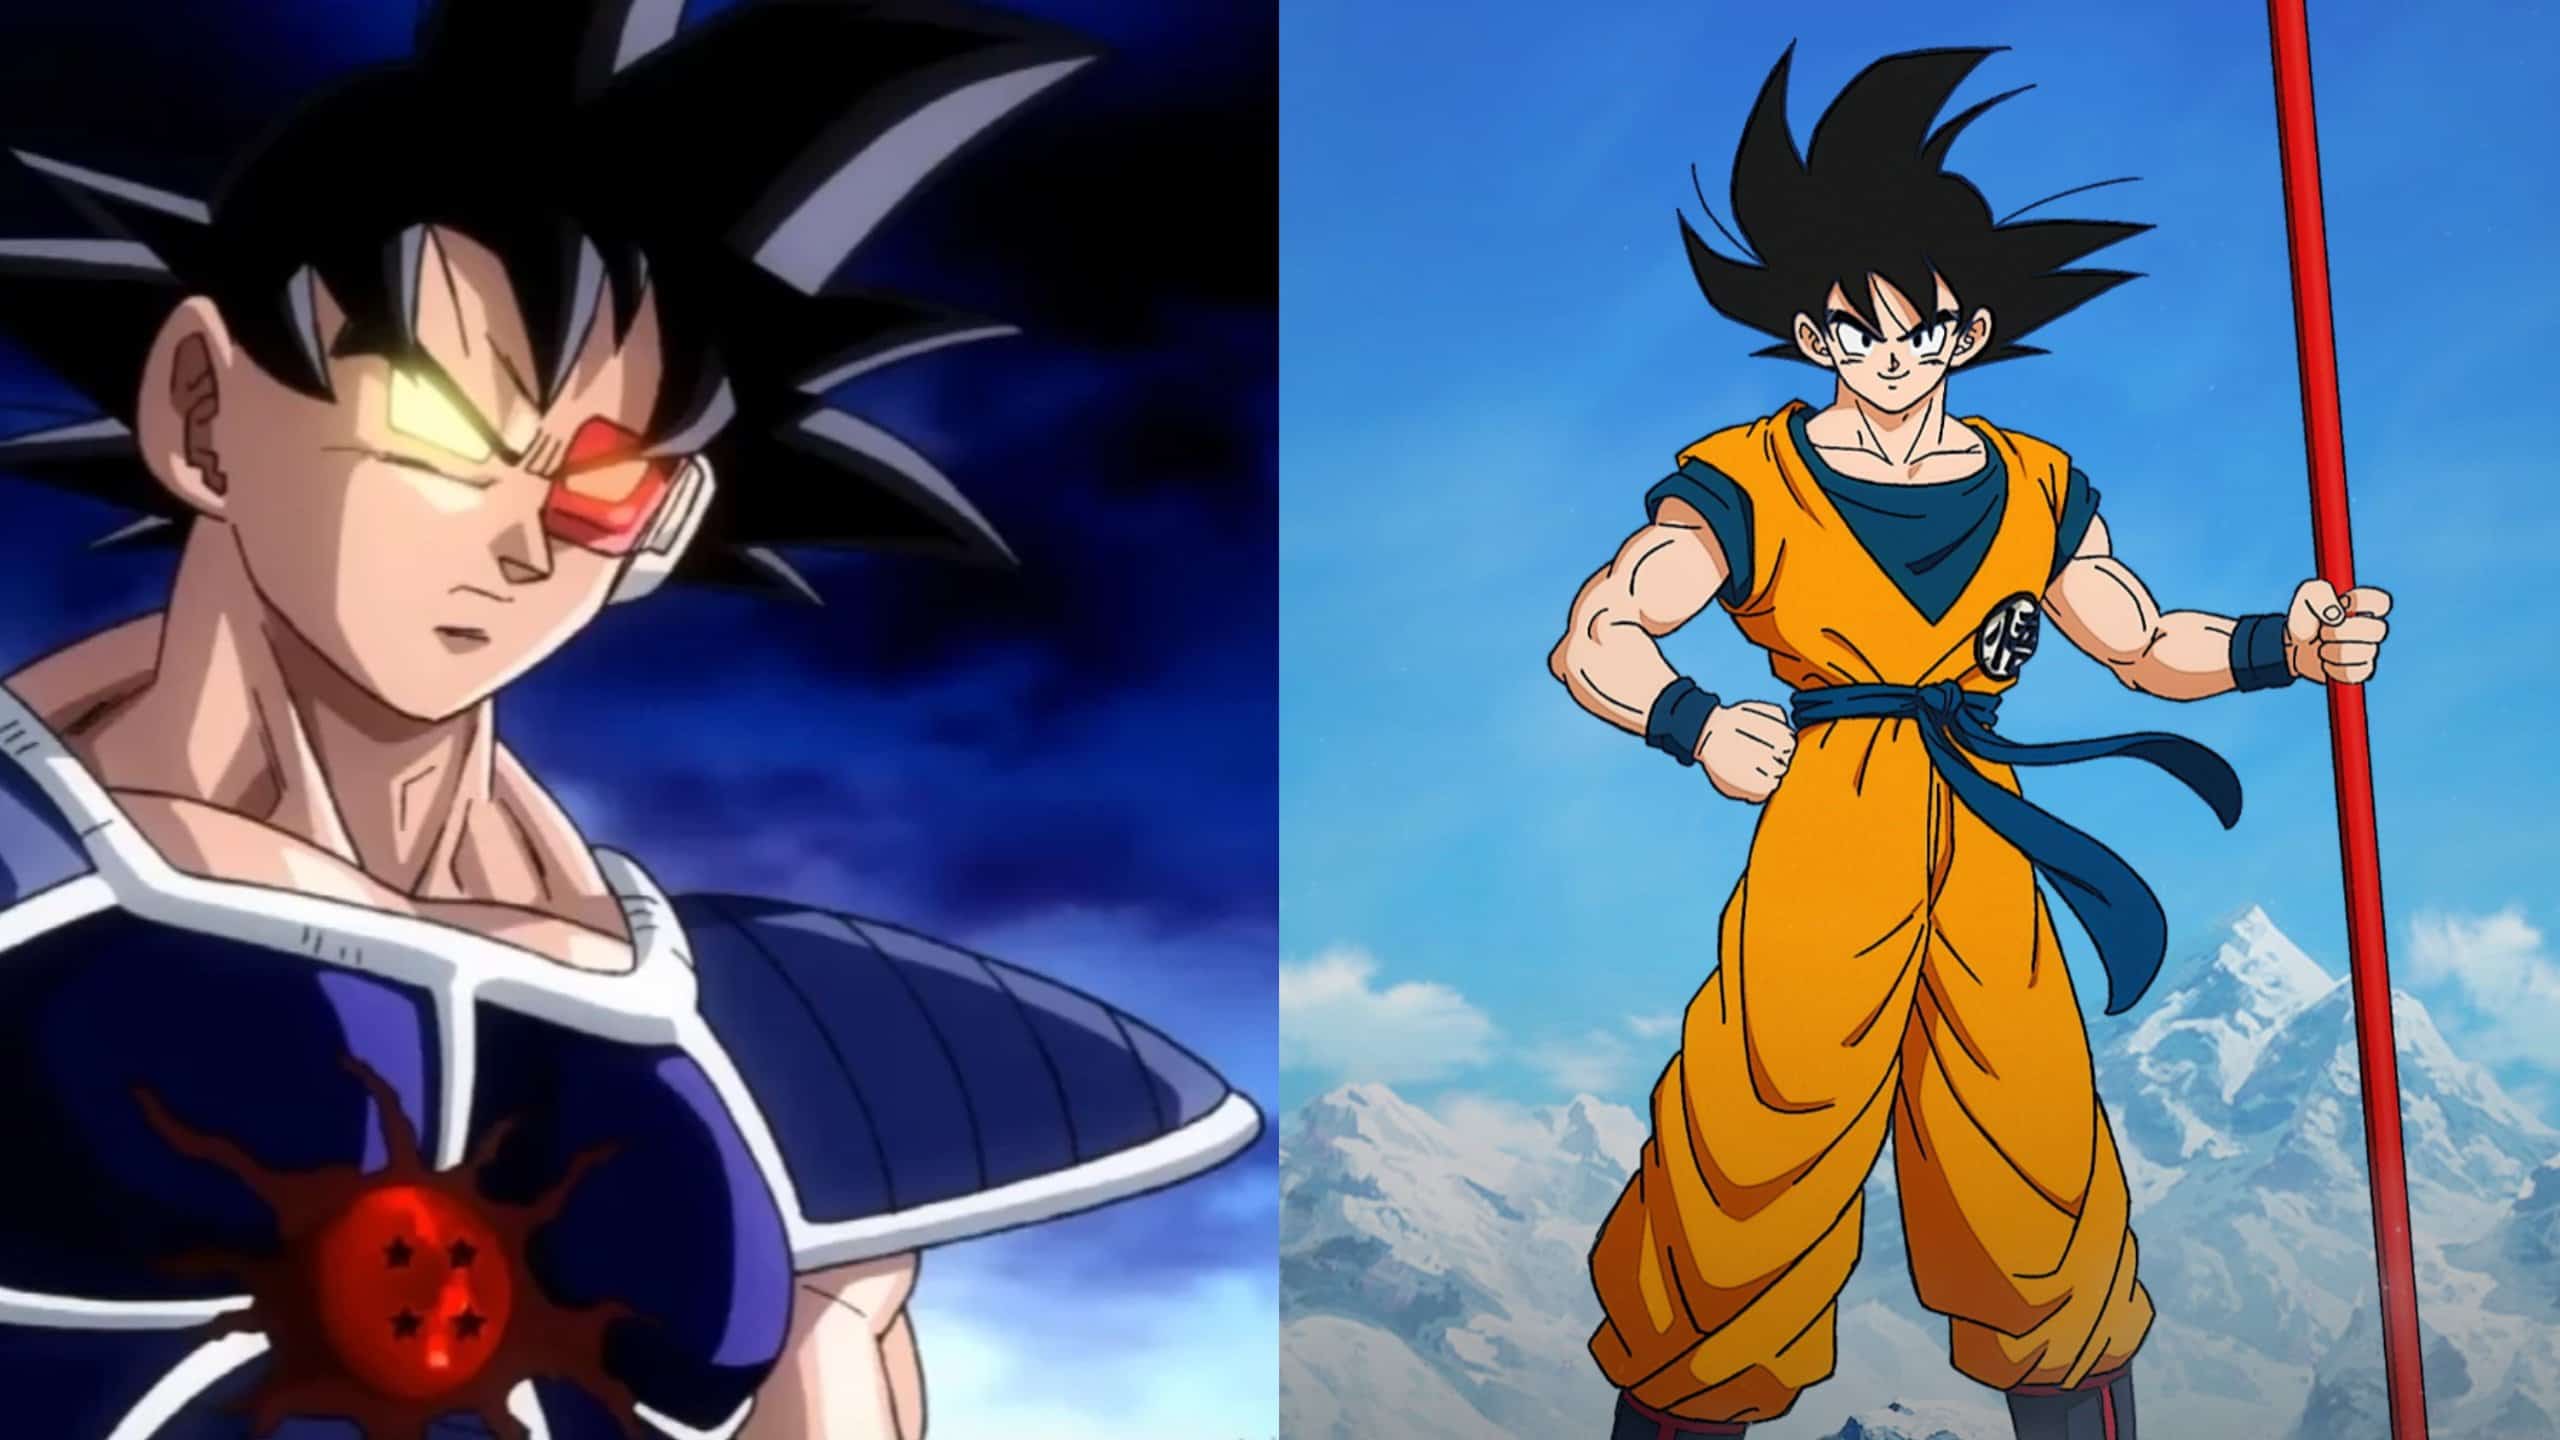 Turles looks similar to Goku